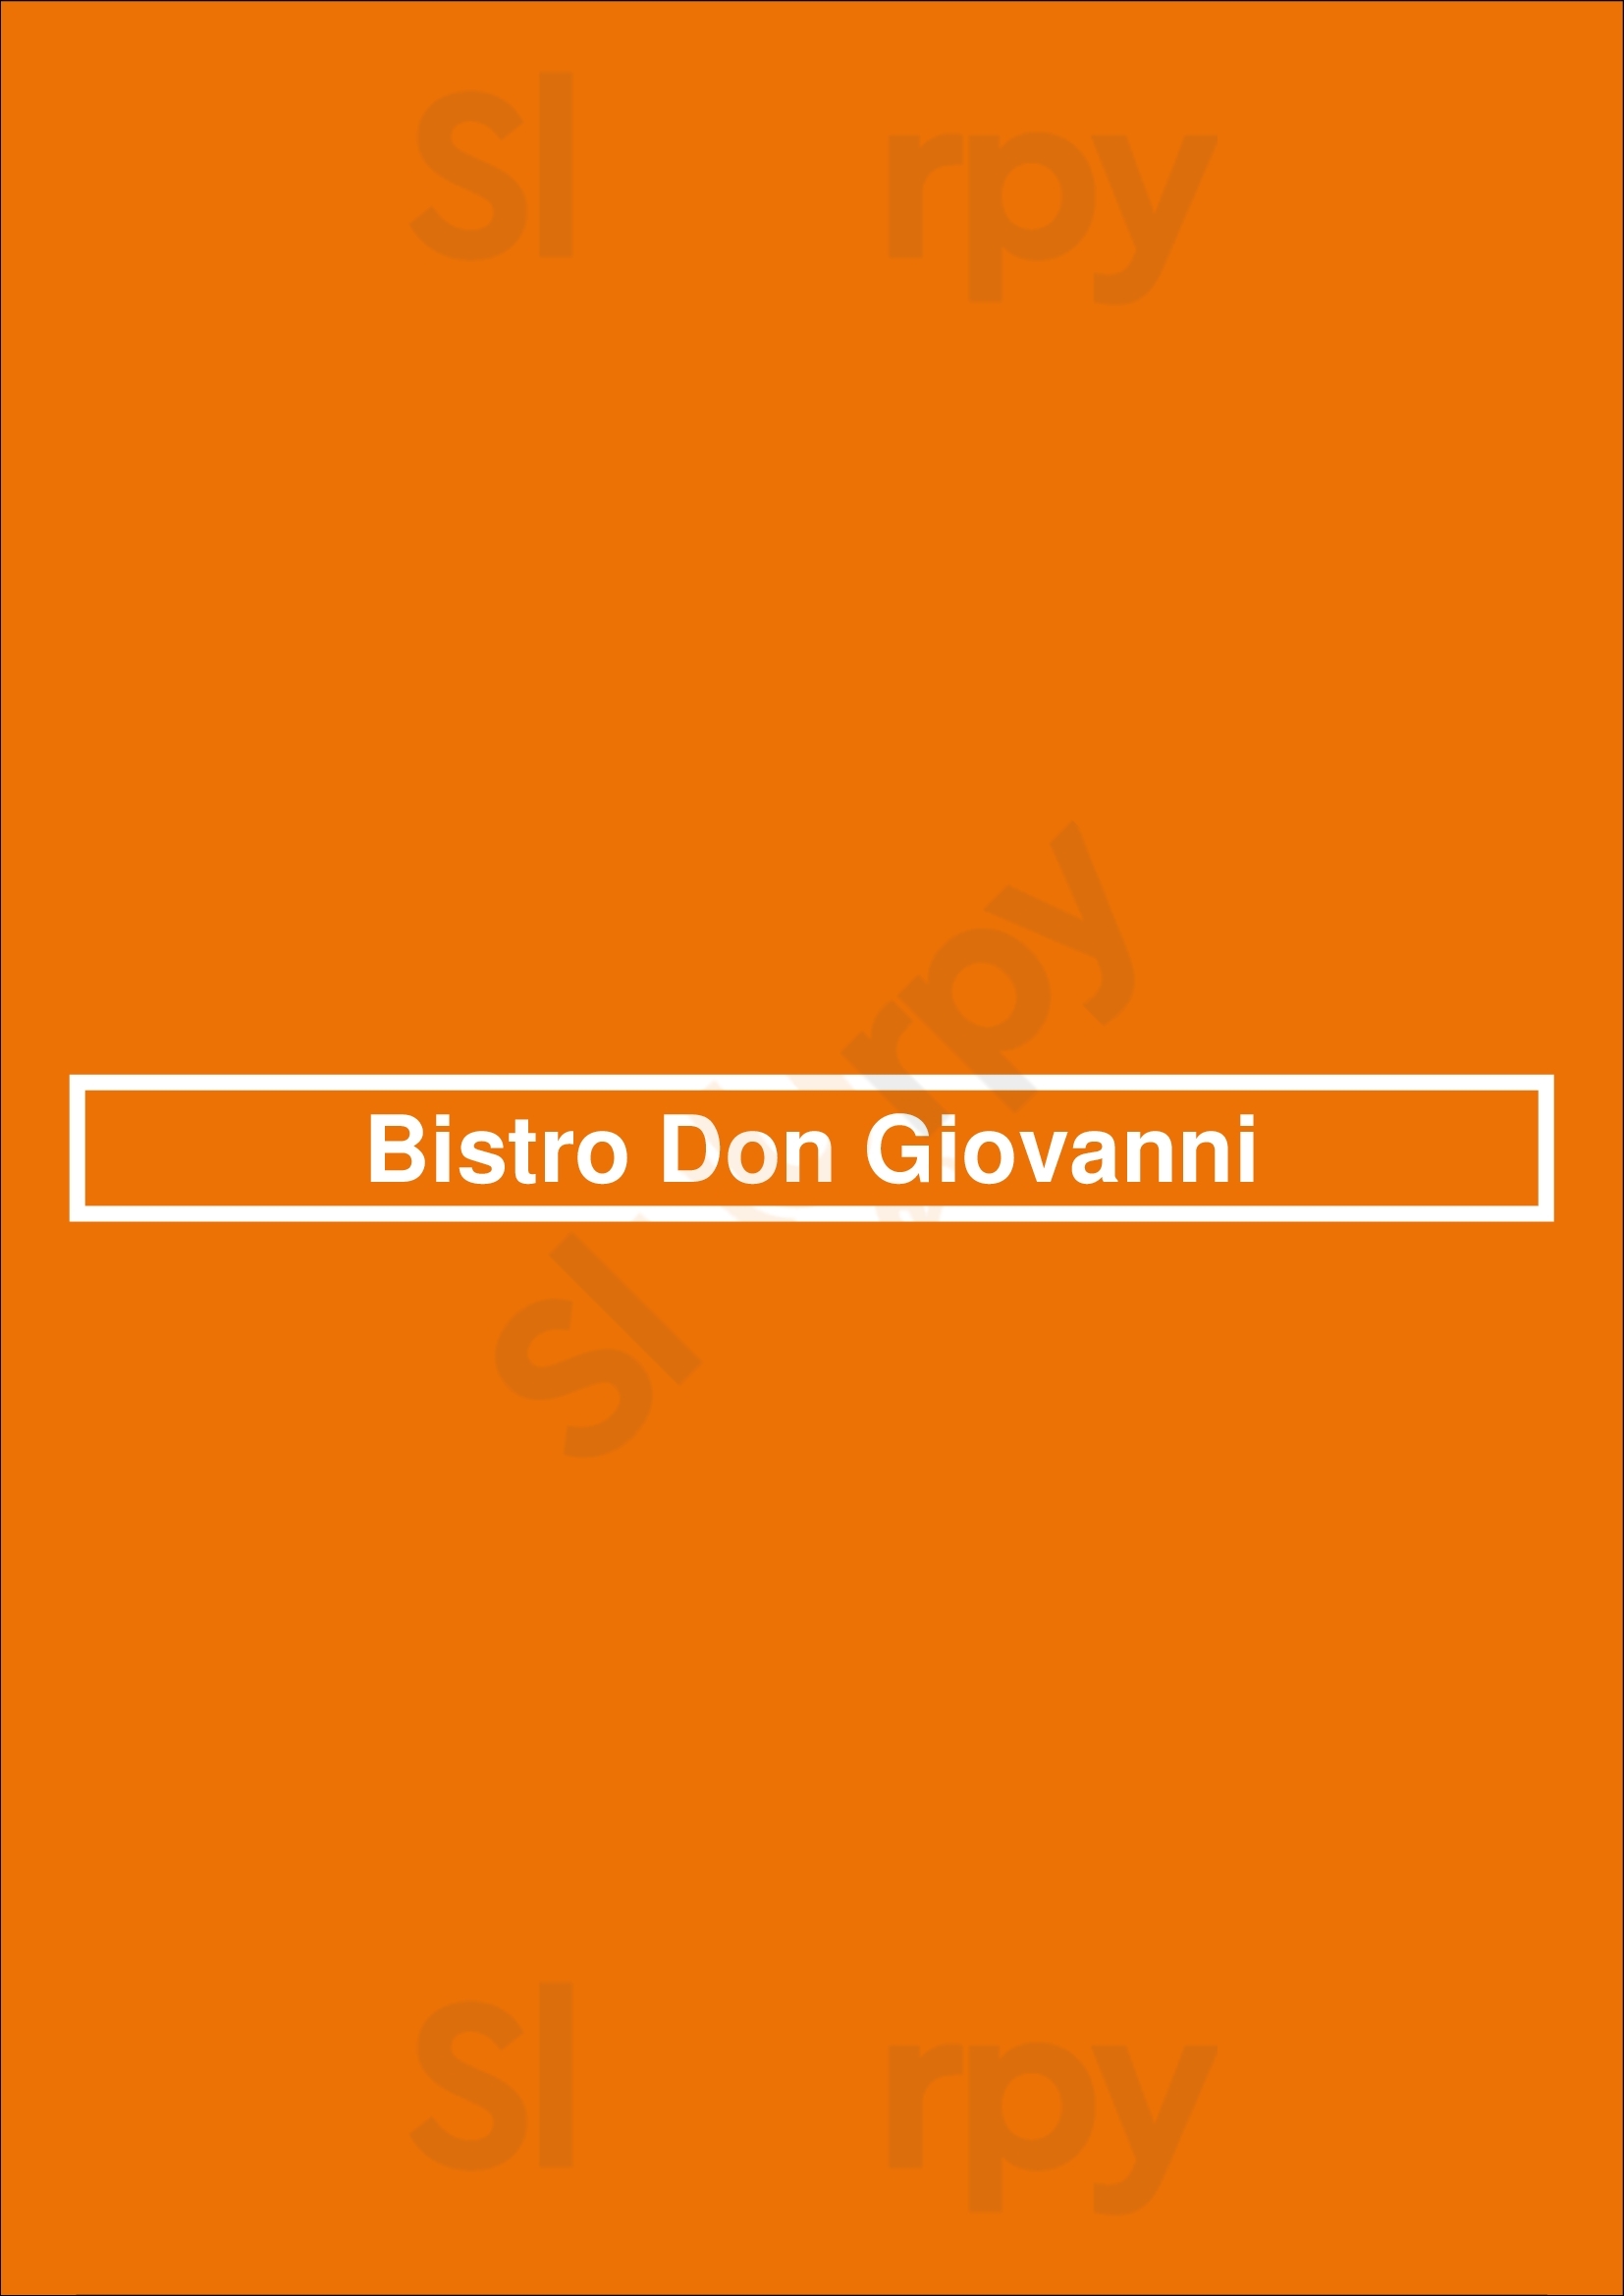 Bistro Don Giovanni Napa Menu - 1